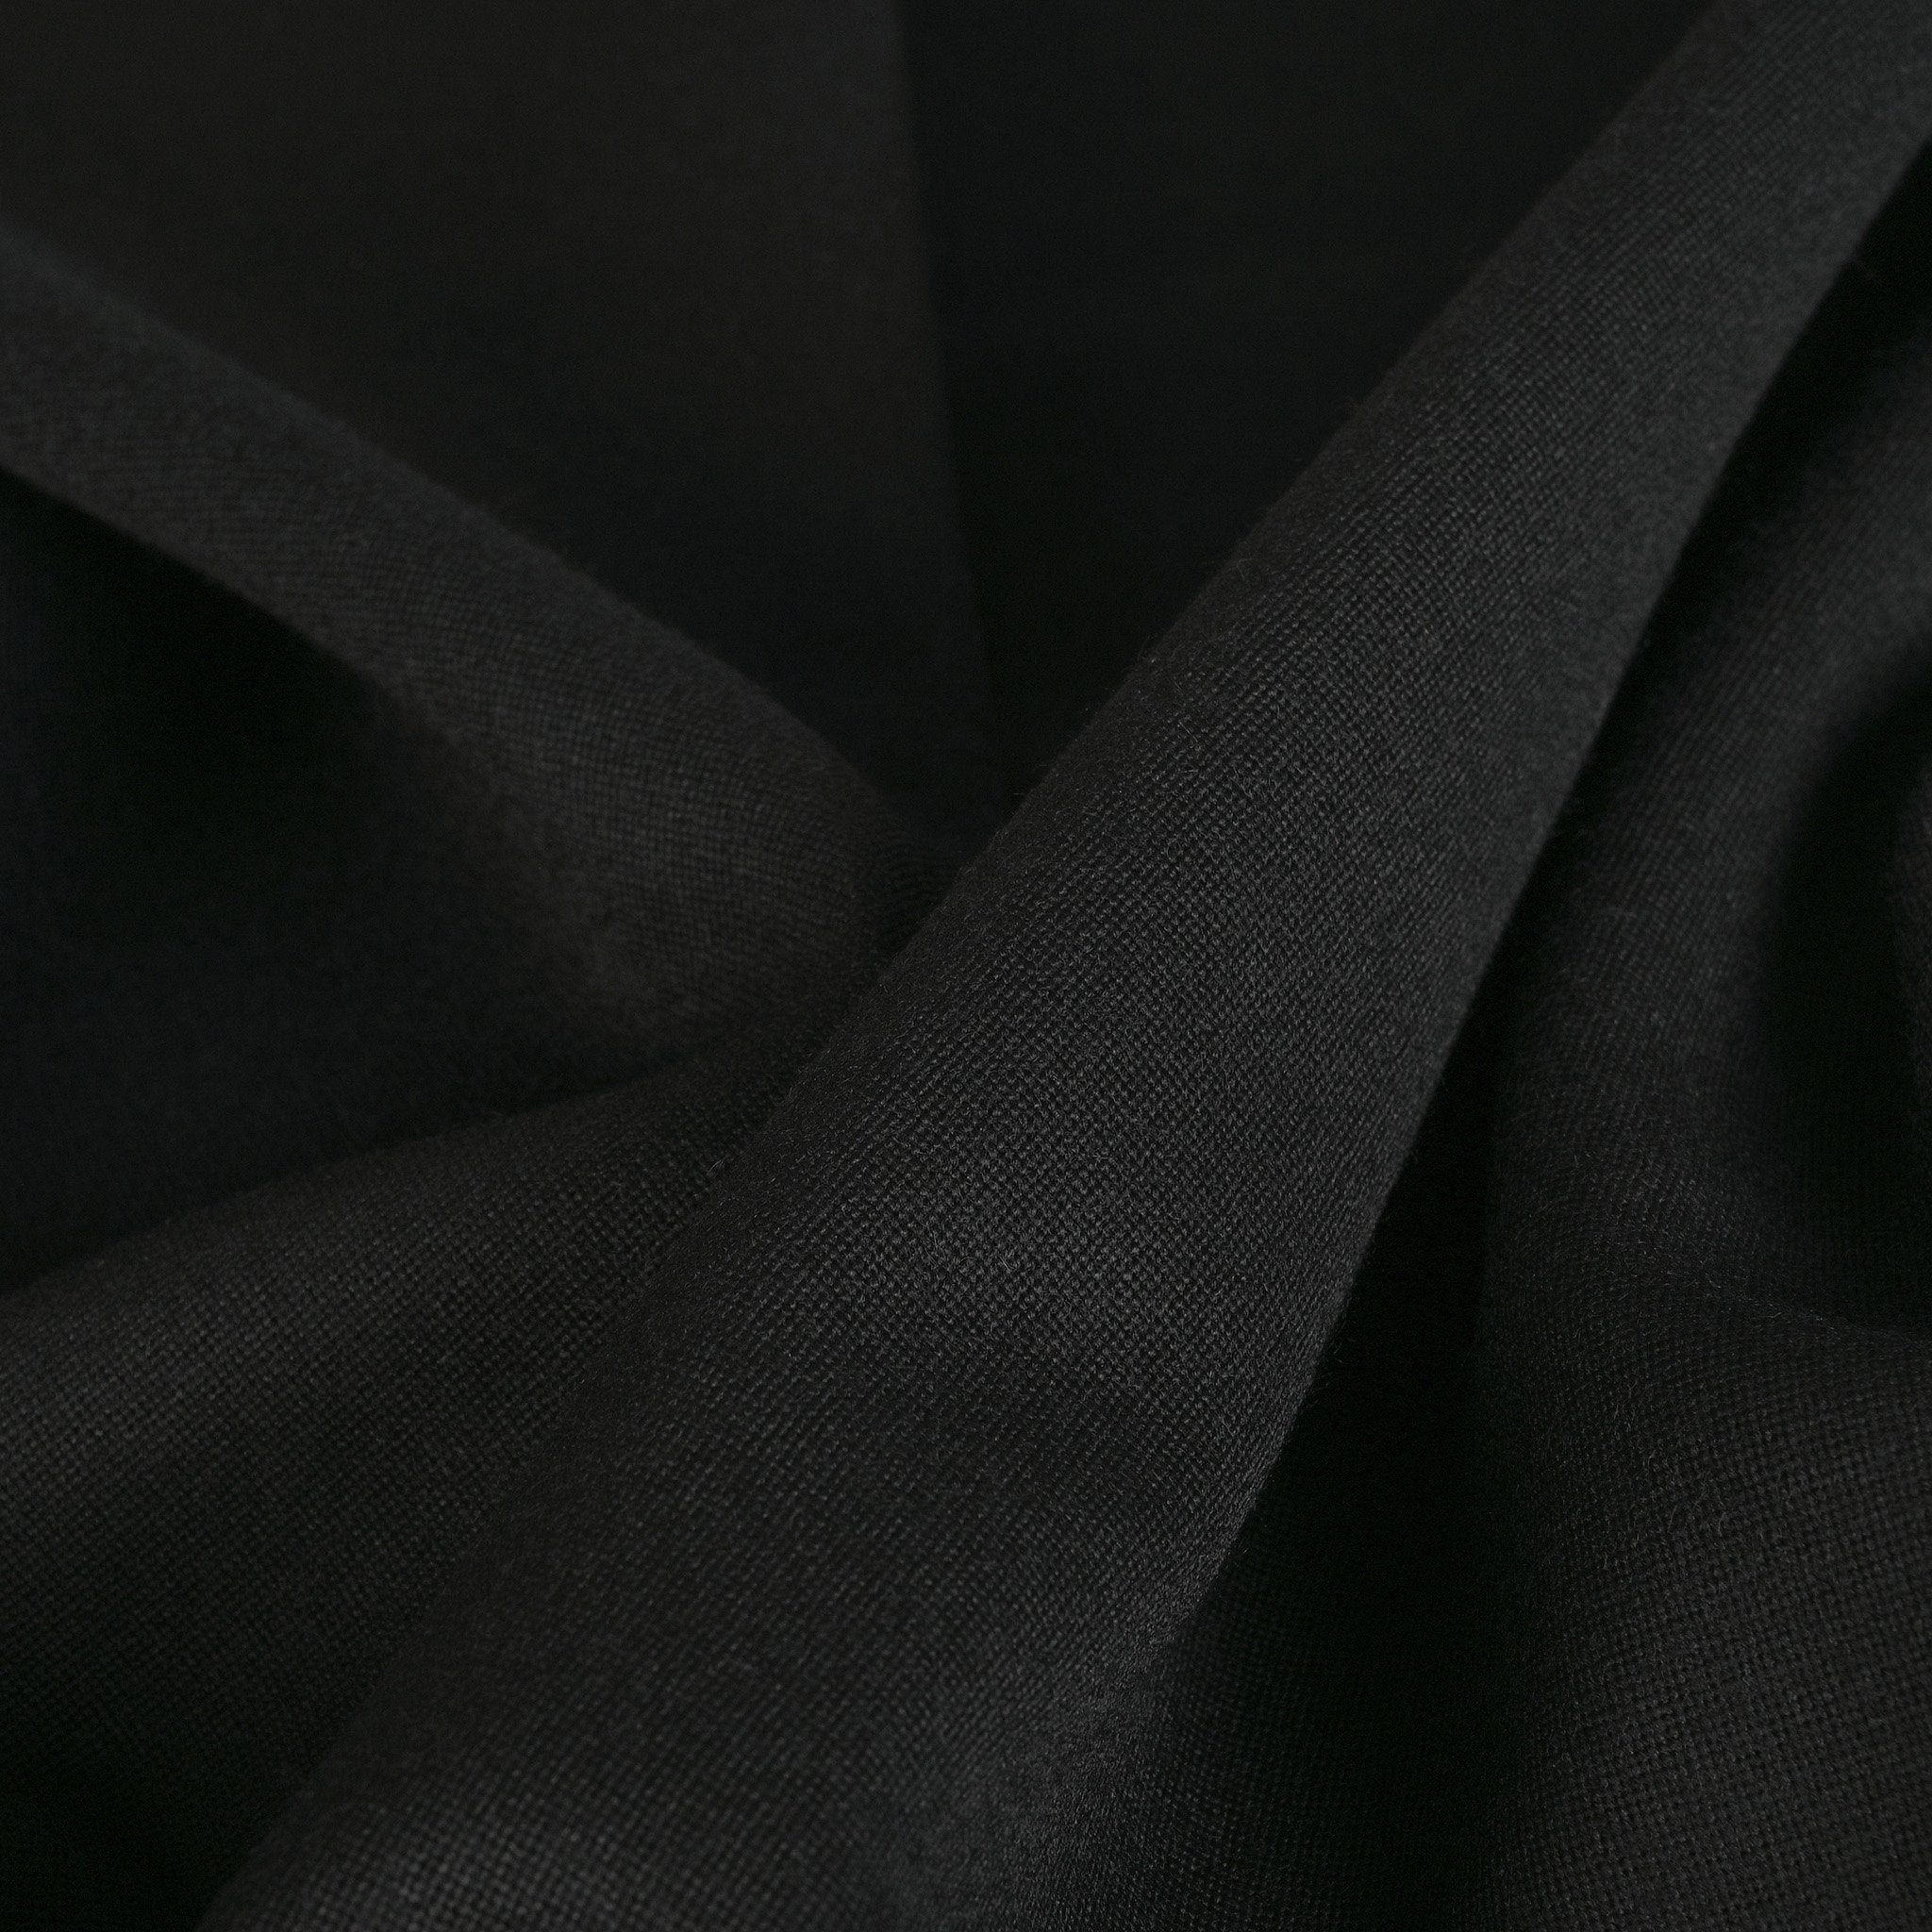 Black Tropical Wool Fabric 3199